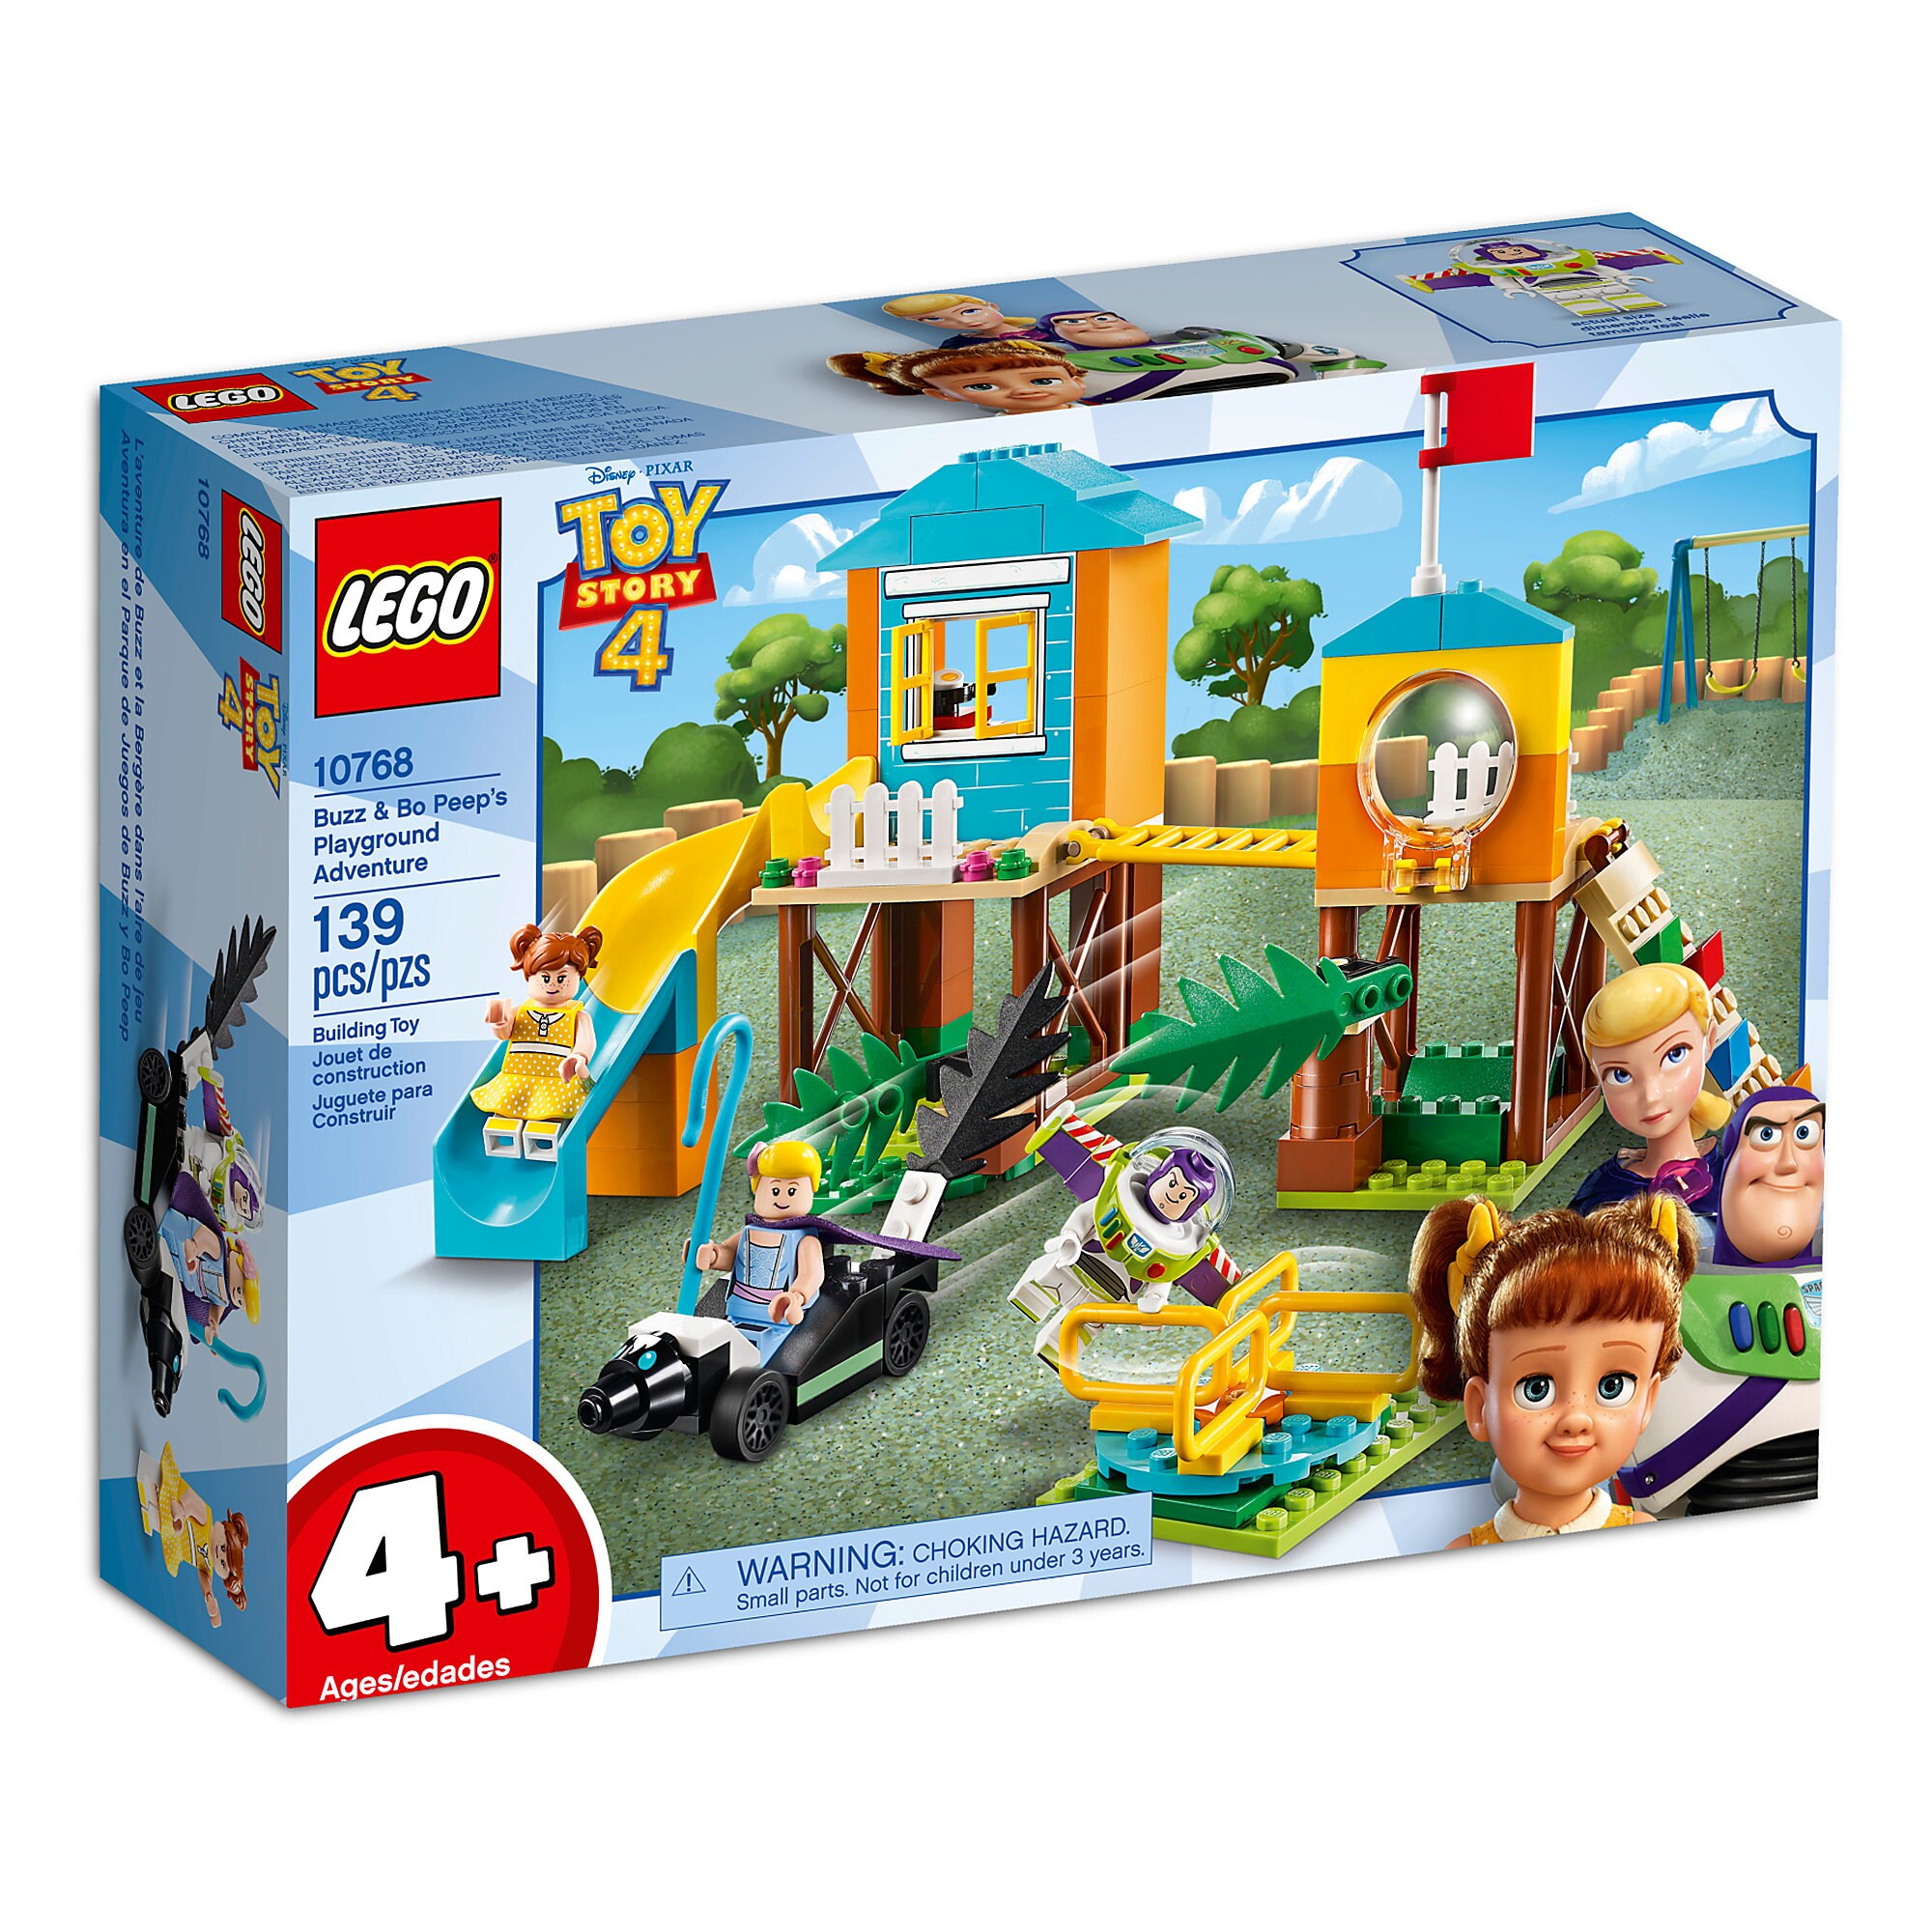 Buzz & Bo Peep's Playground Adventure Play Set by LEGO - Toy Story 4